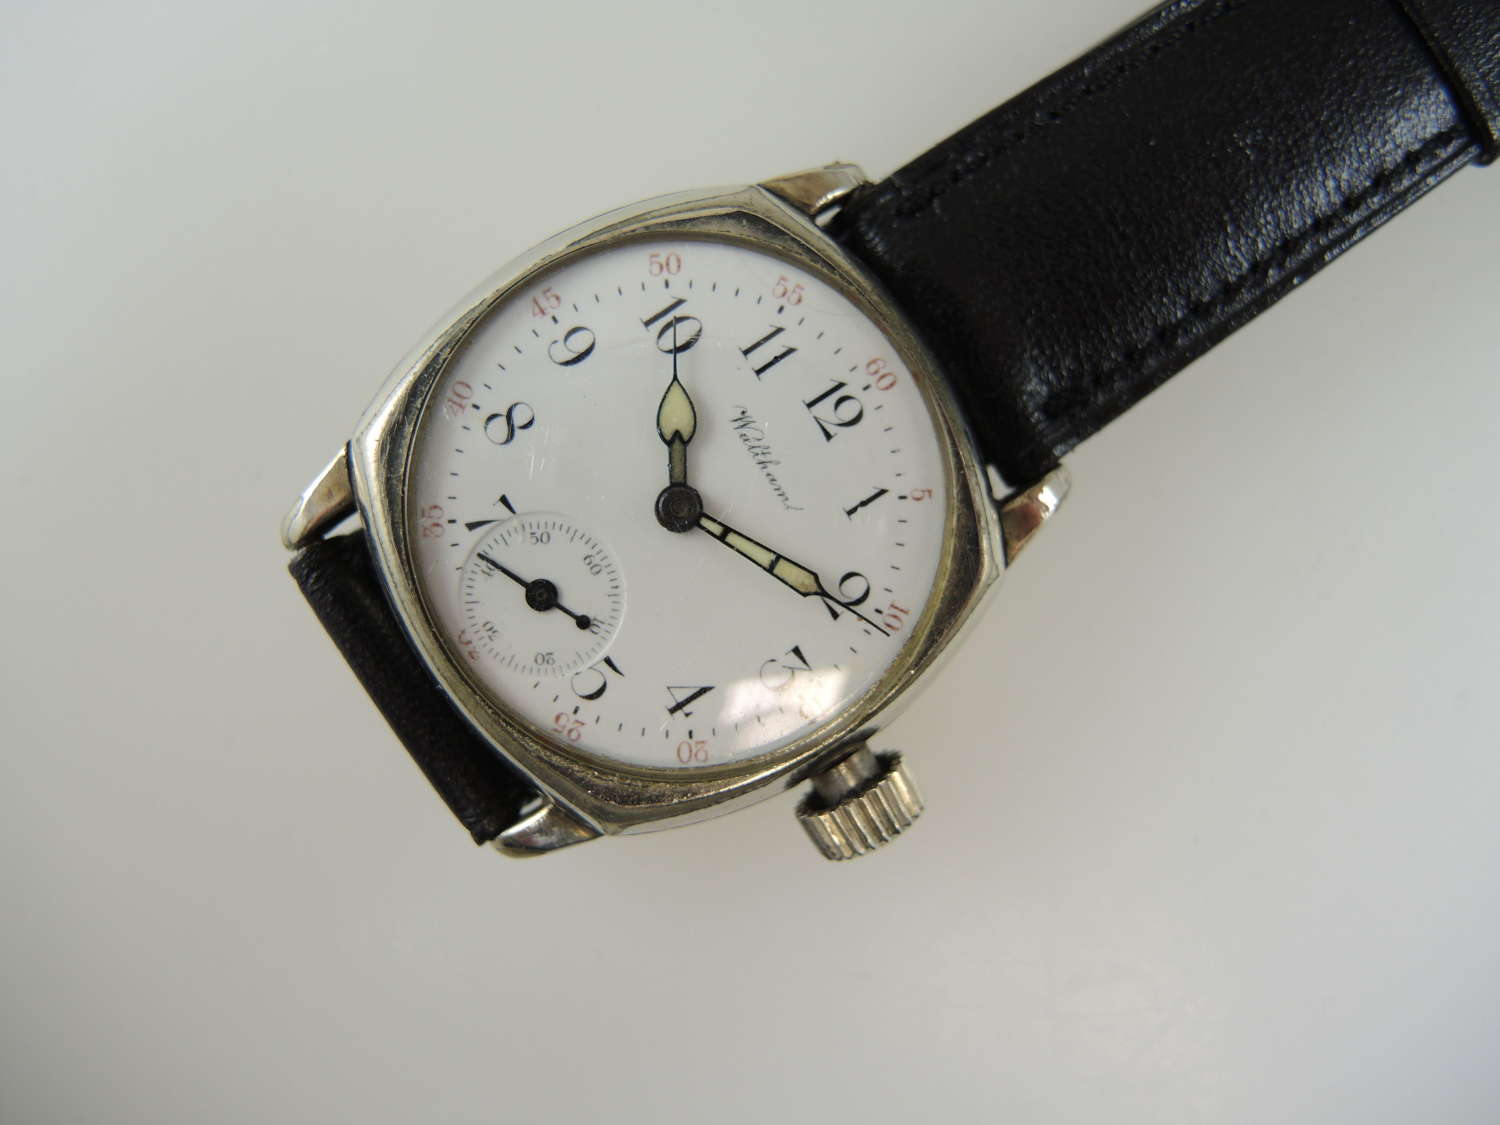 Early Waltham wrist watch c1910